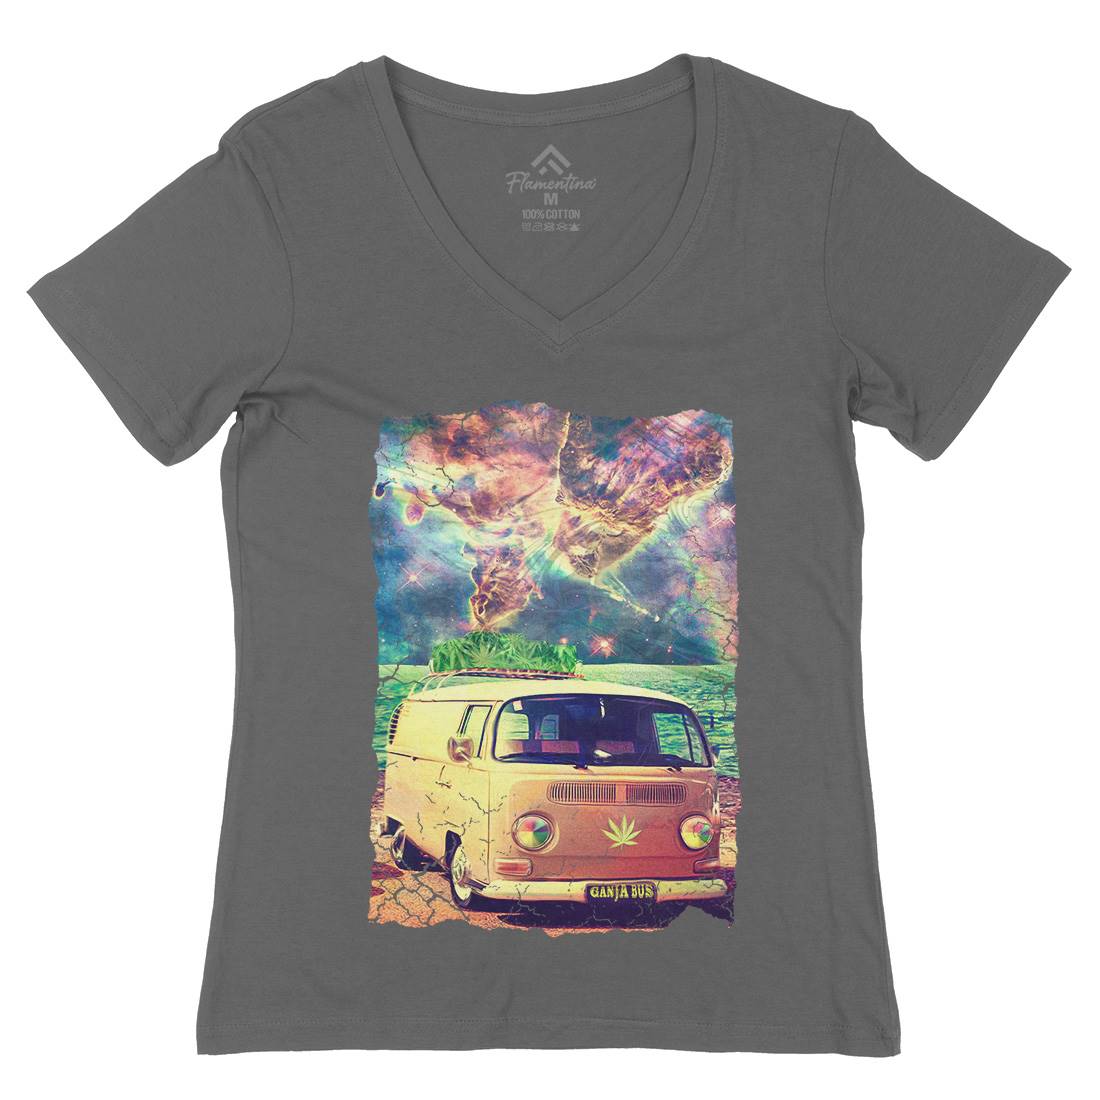 Ganja Bus Womens Organic V-Neck T-Shirt Space A843